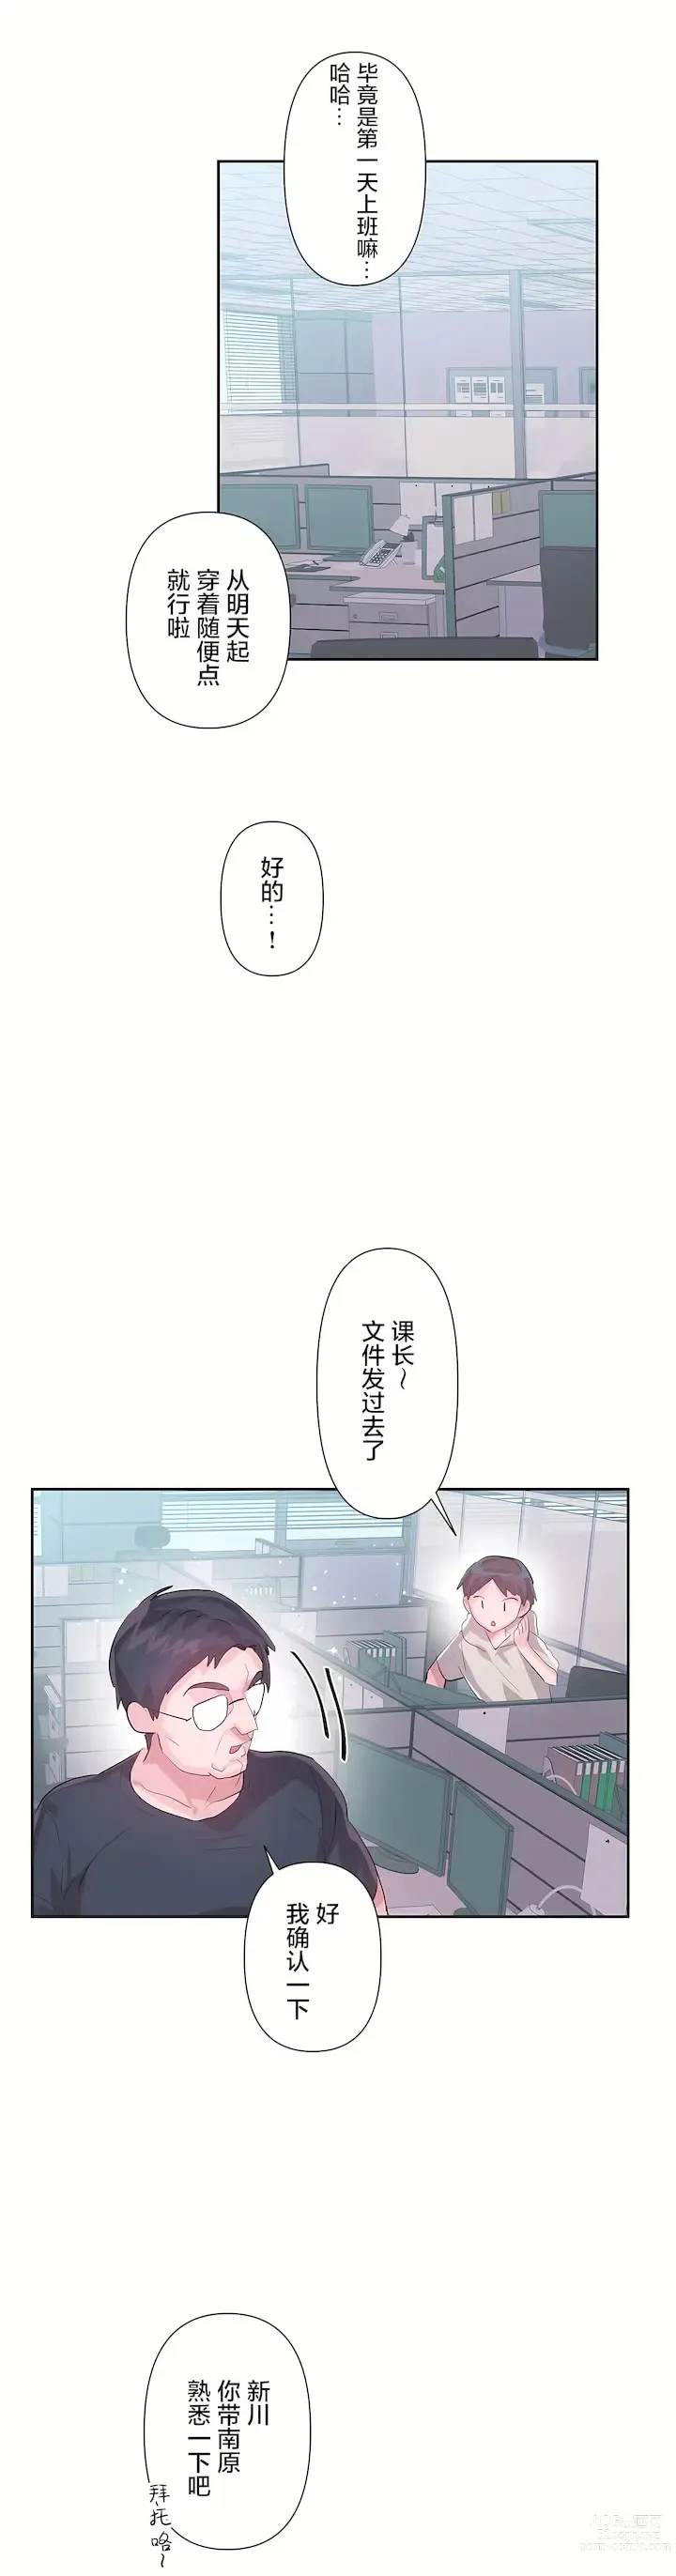 Page 17 of manga 爱爱仙境 LoveLove Wonder Land -online- 46-82